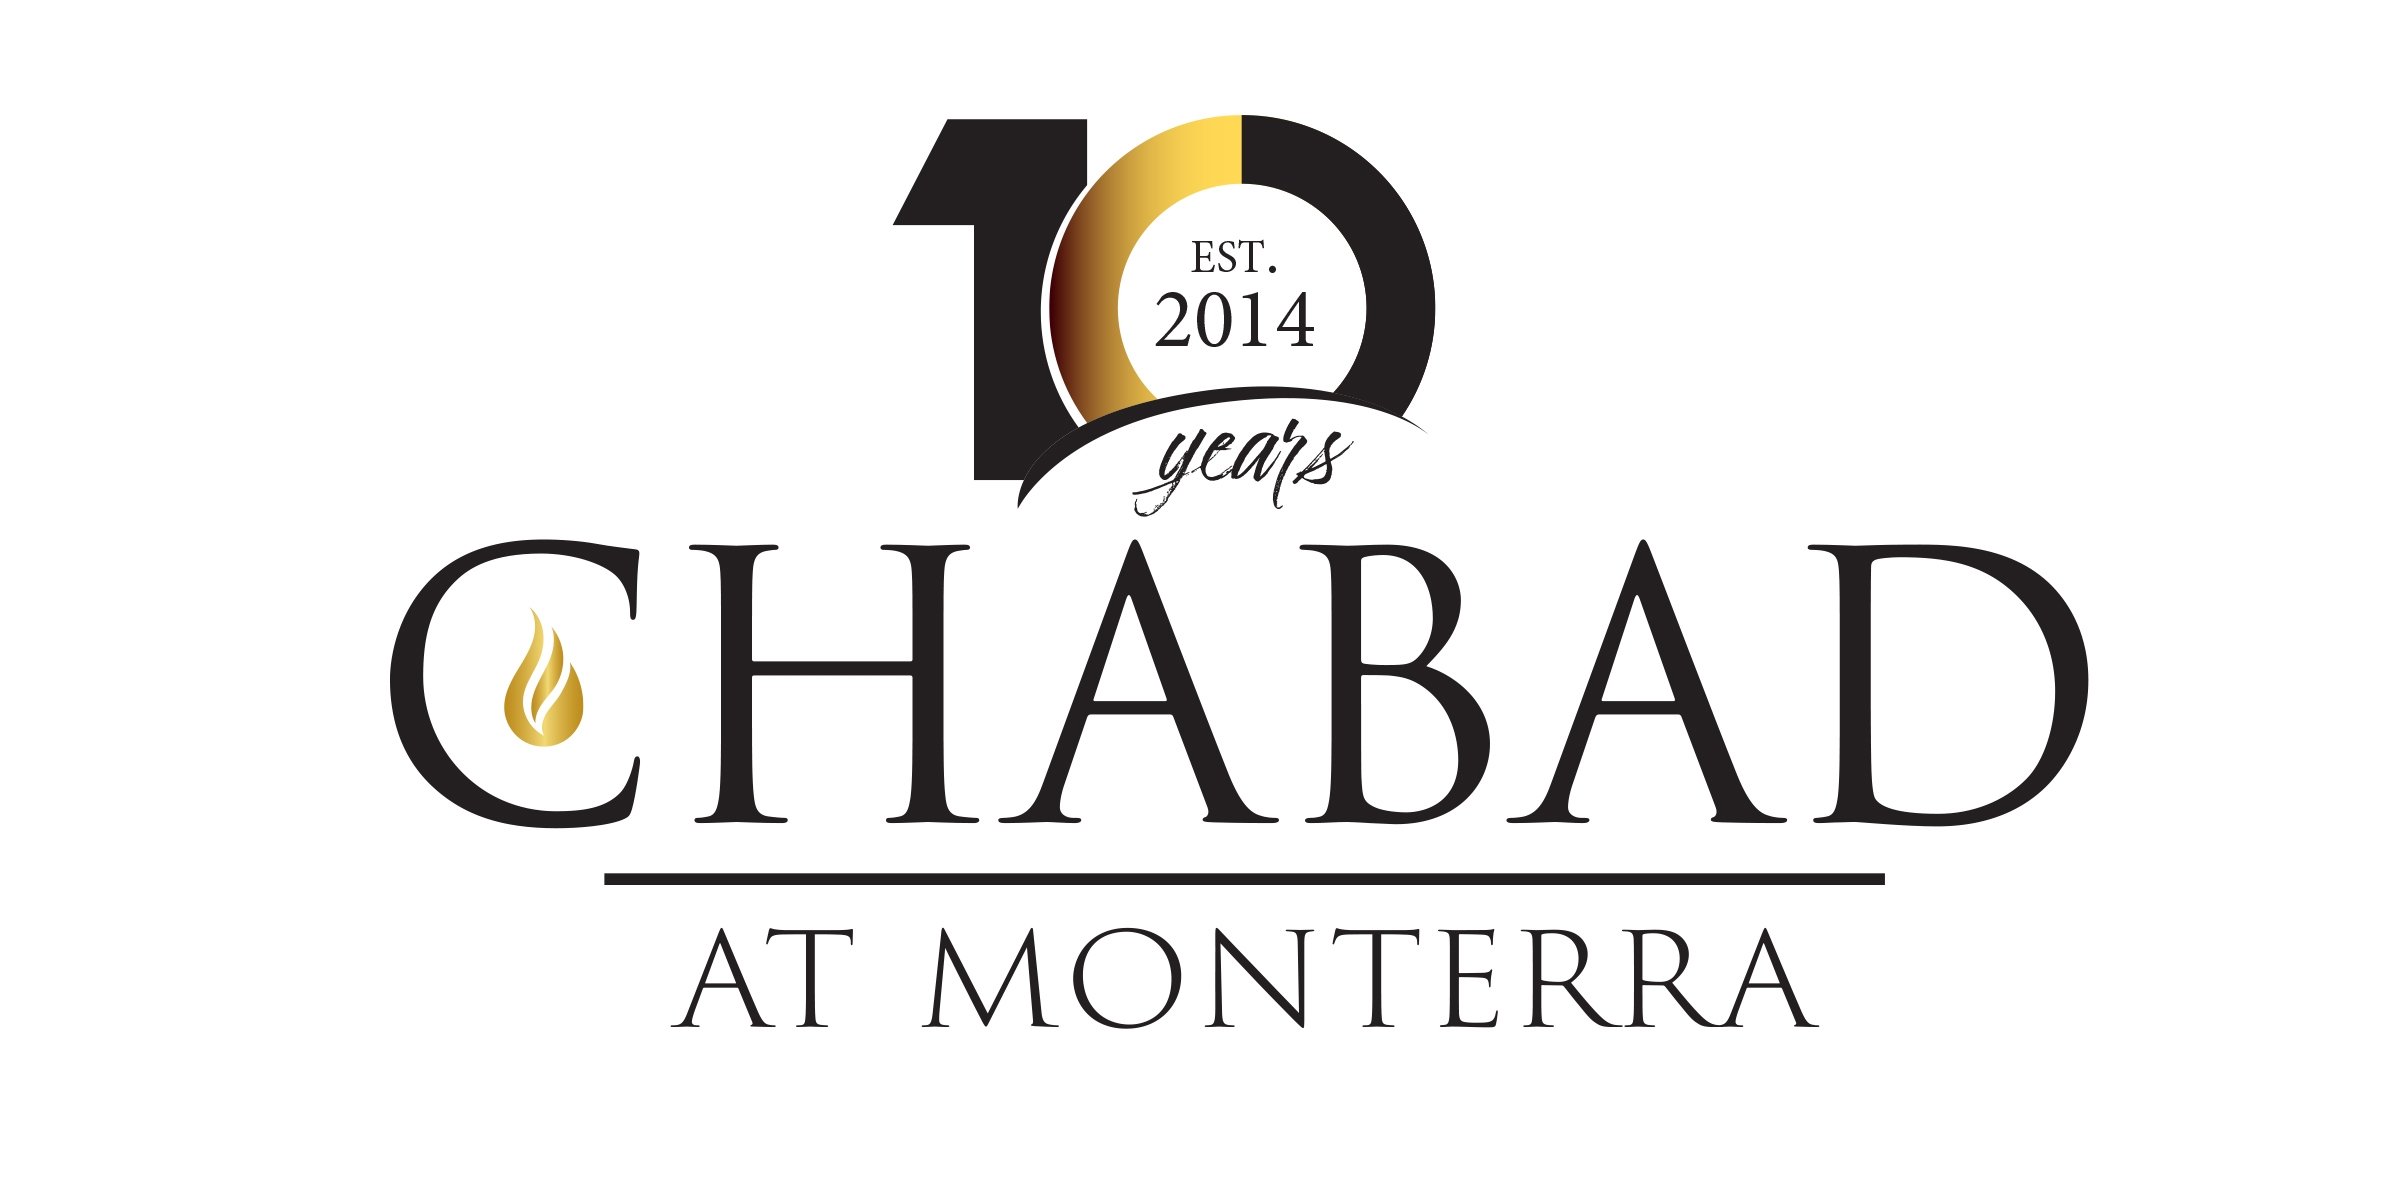 Adi---Chabad-at-Monterra---Logo-Idea (1).png